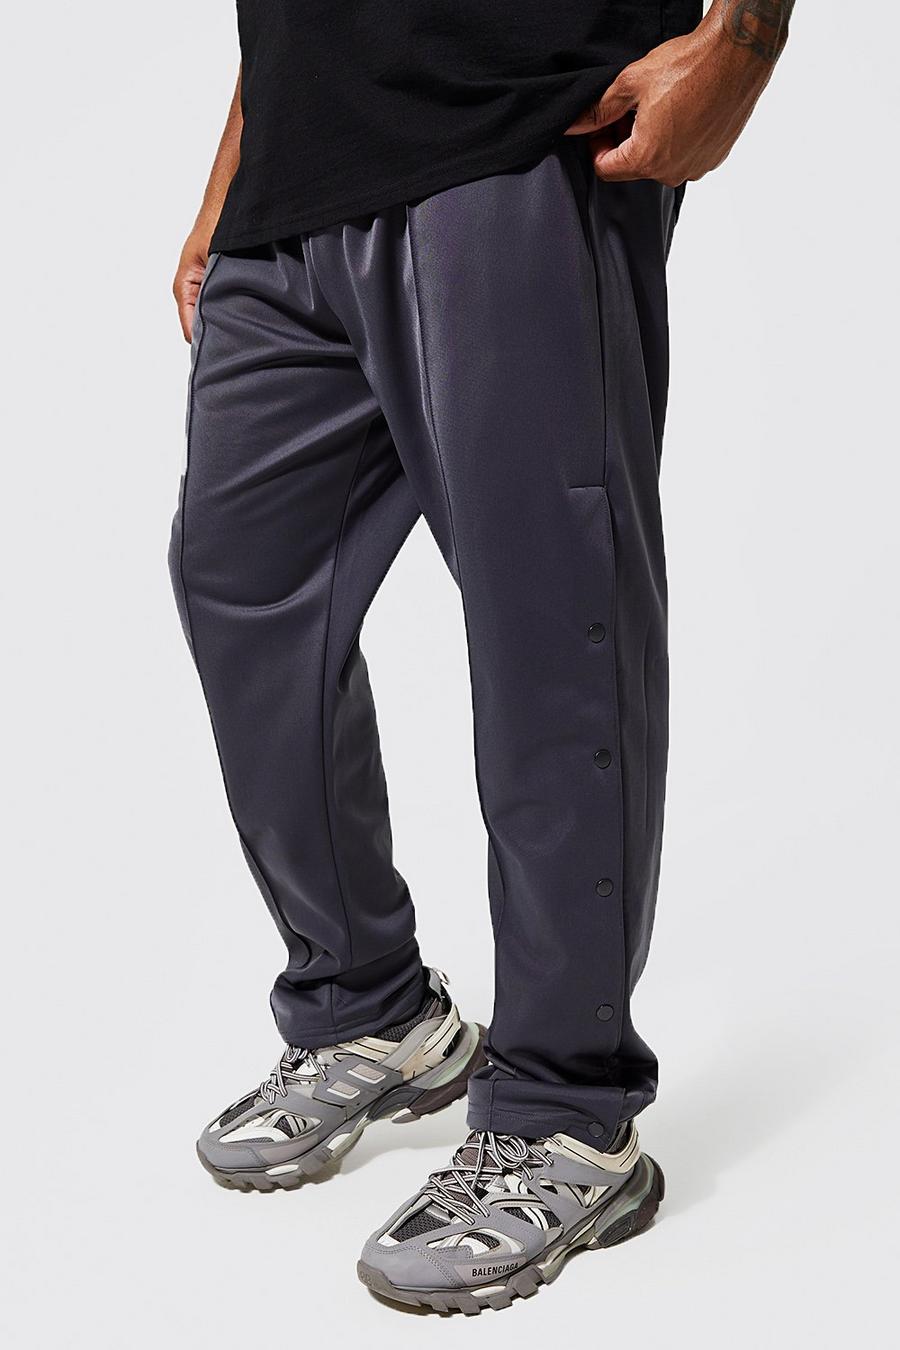 Plus Trikot-Jogginghose mit Druckknöpfen, Charcoal grey